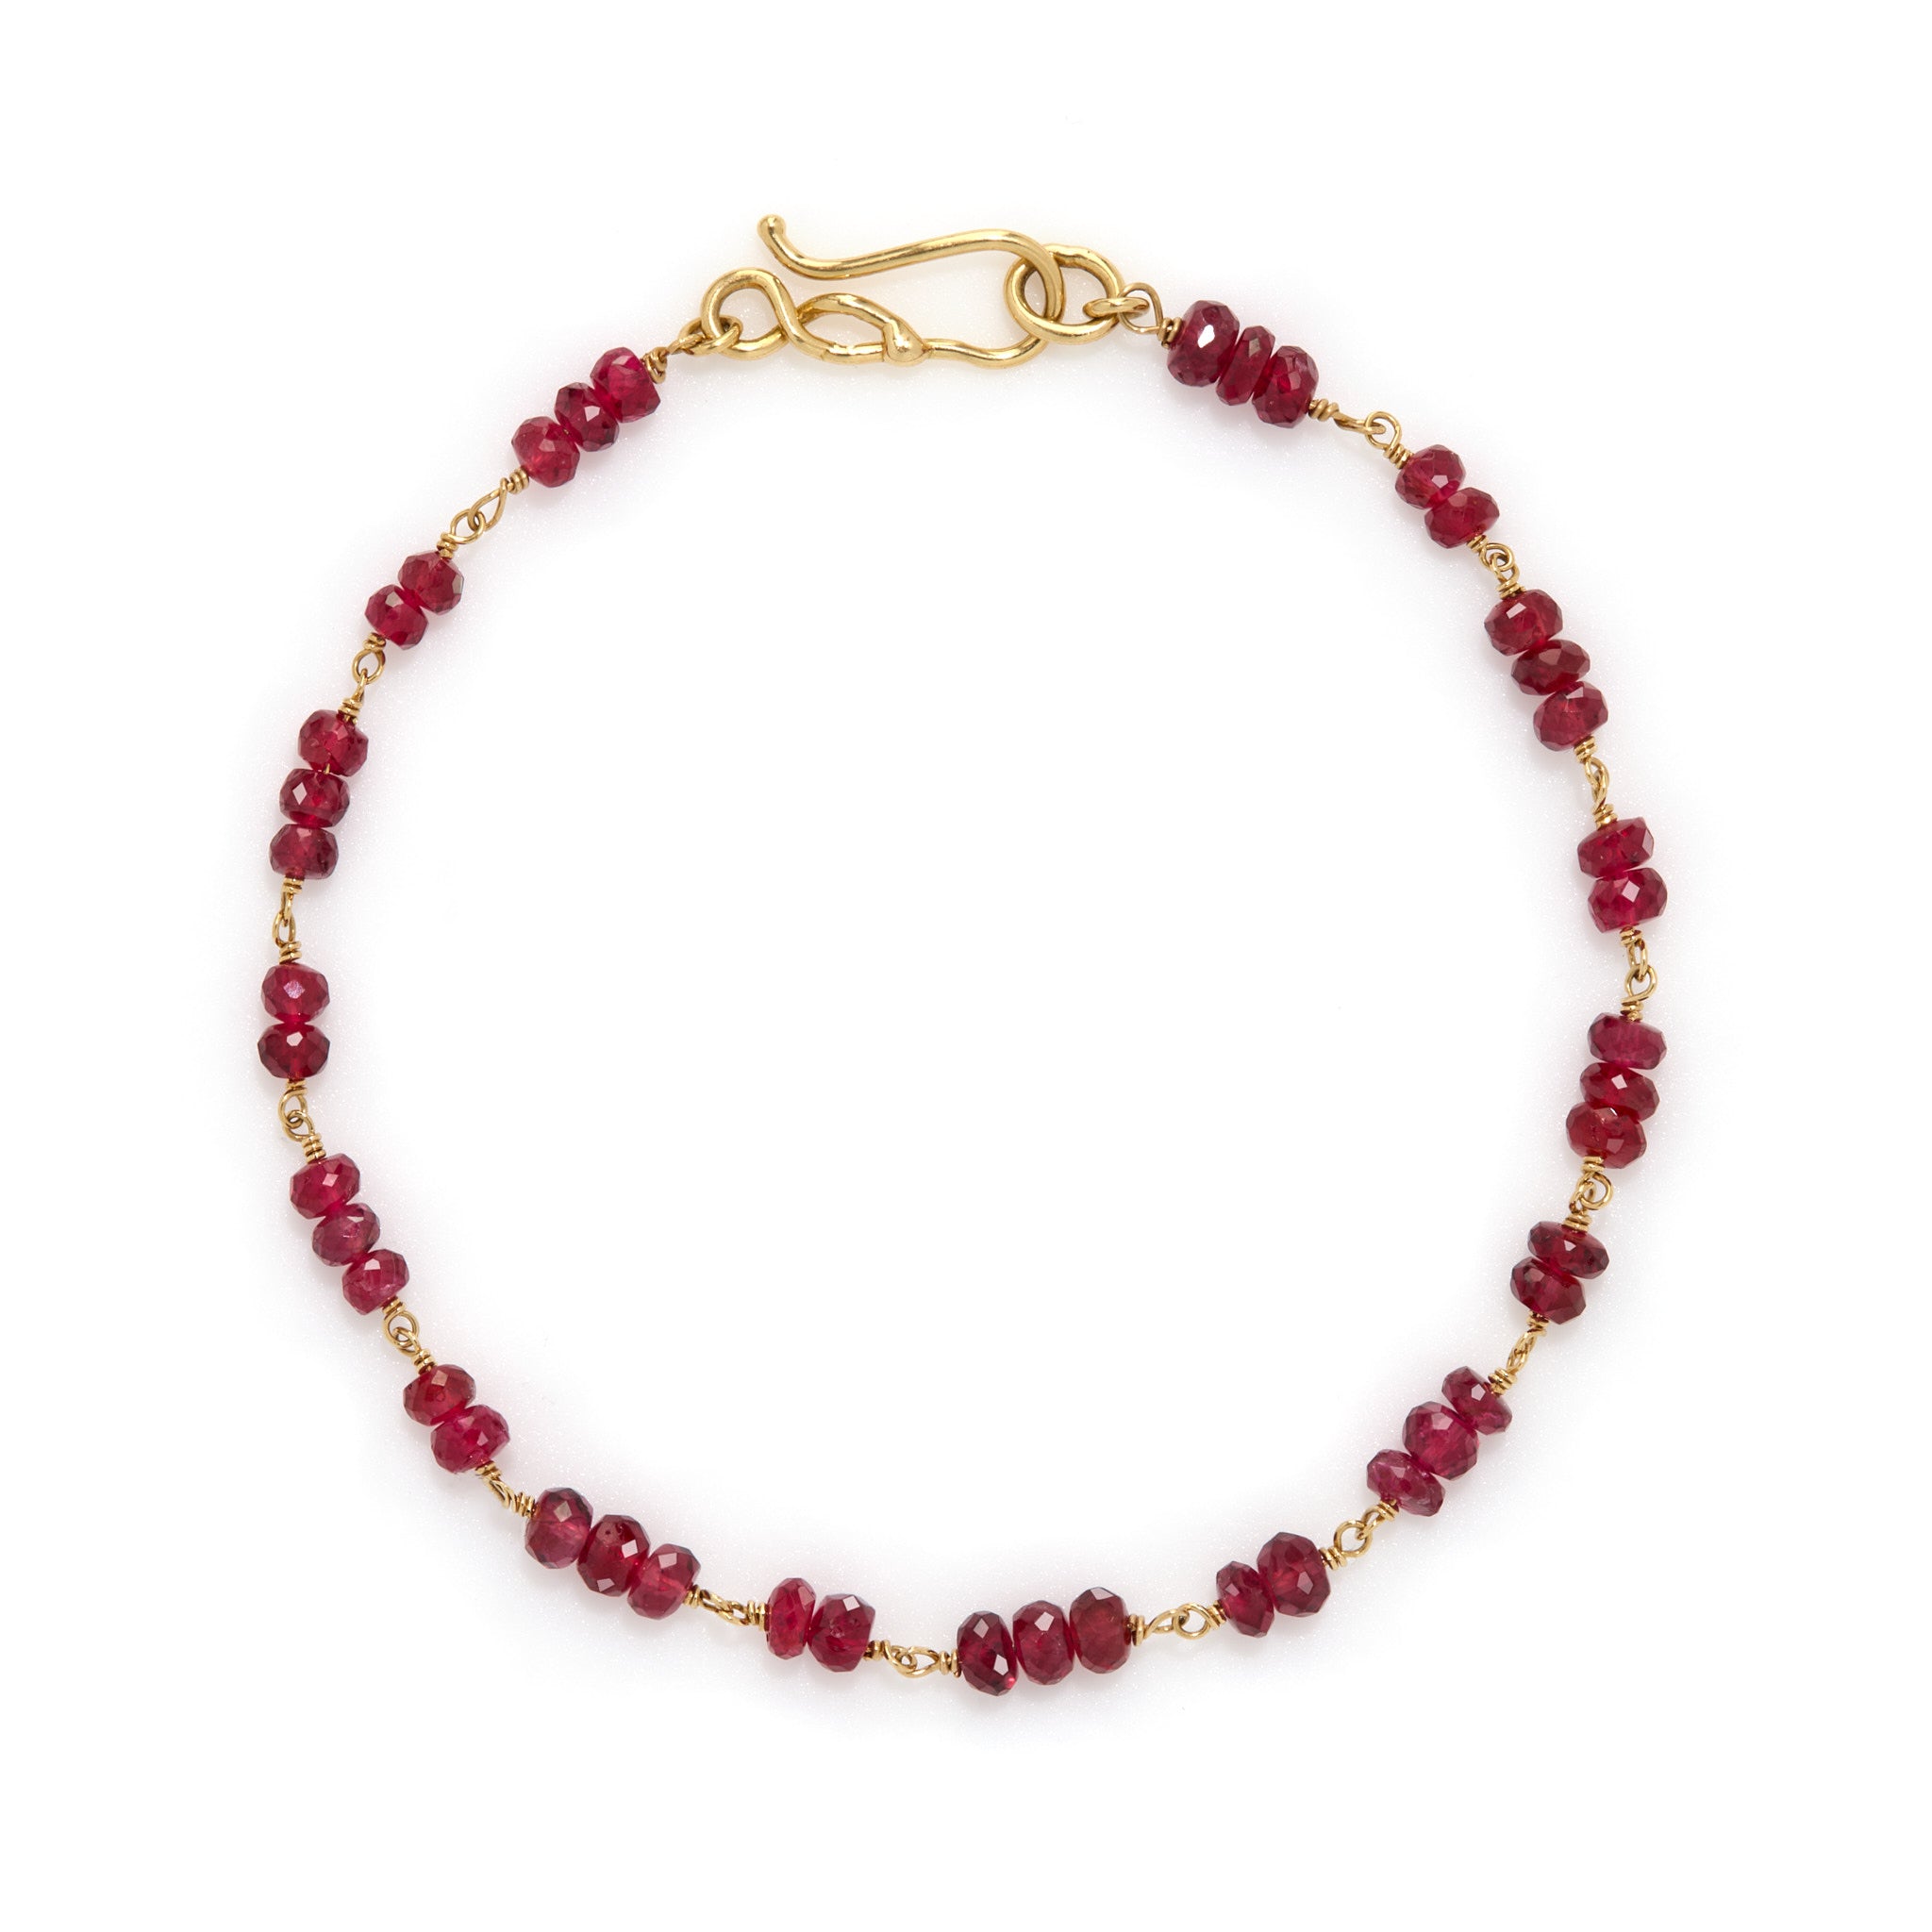 Red spinel faceted bead bracelet.